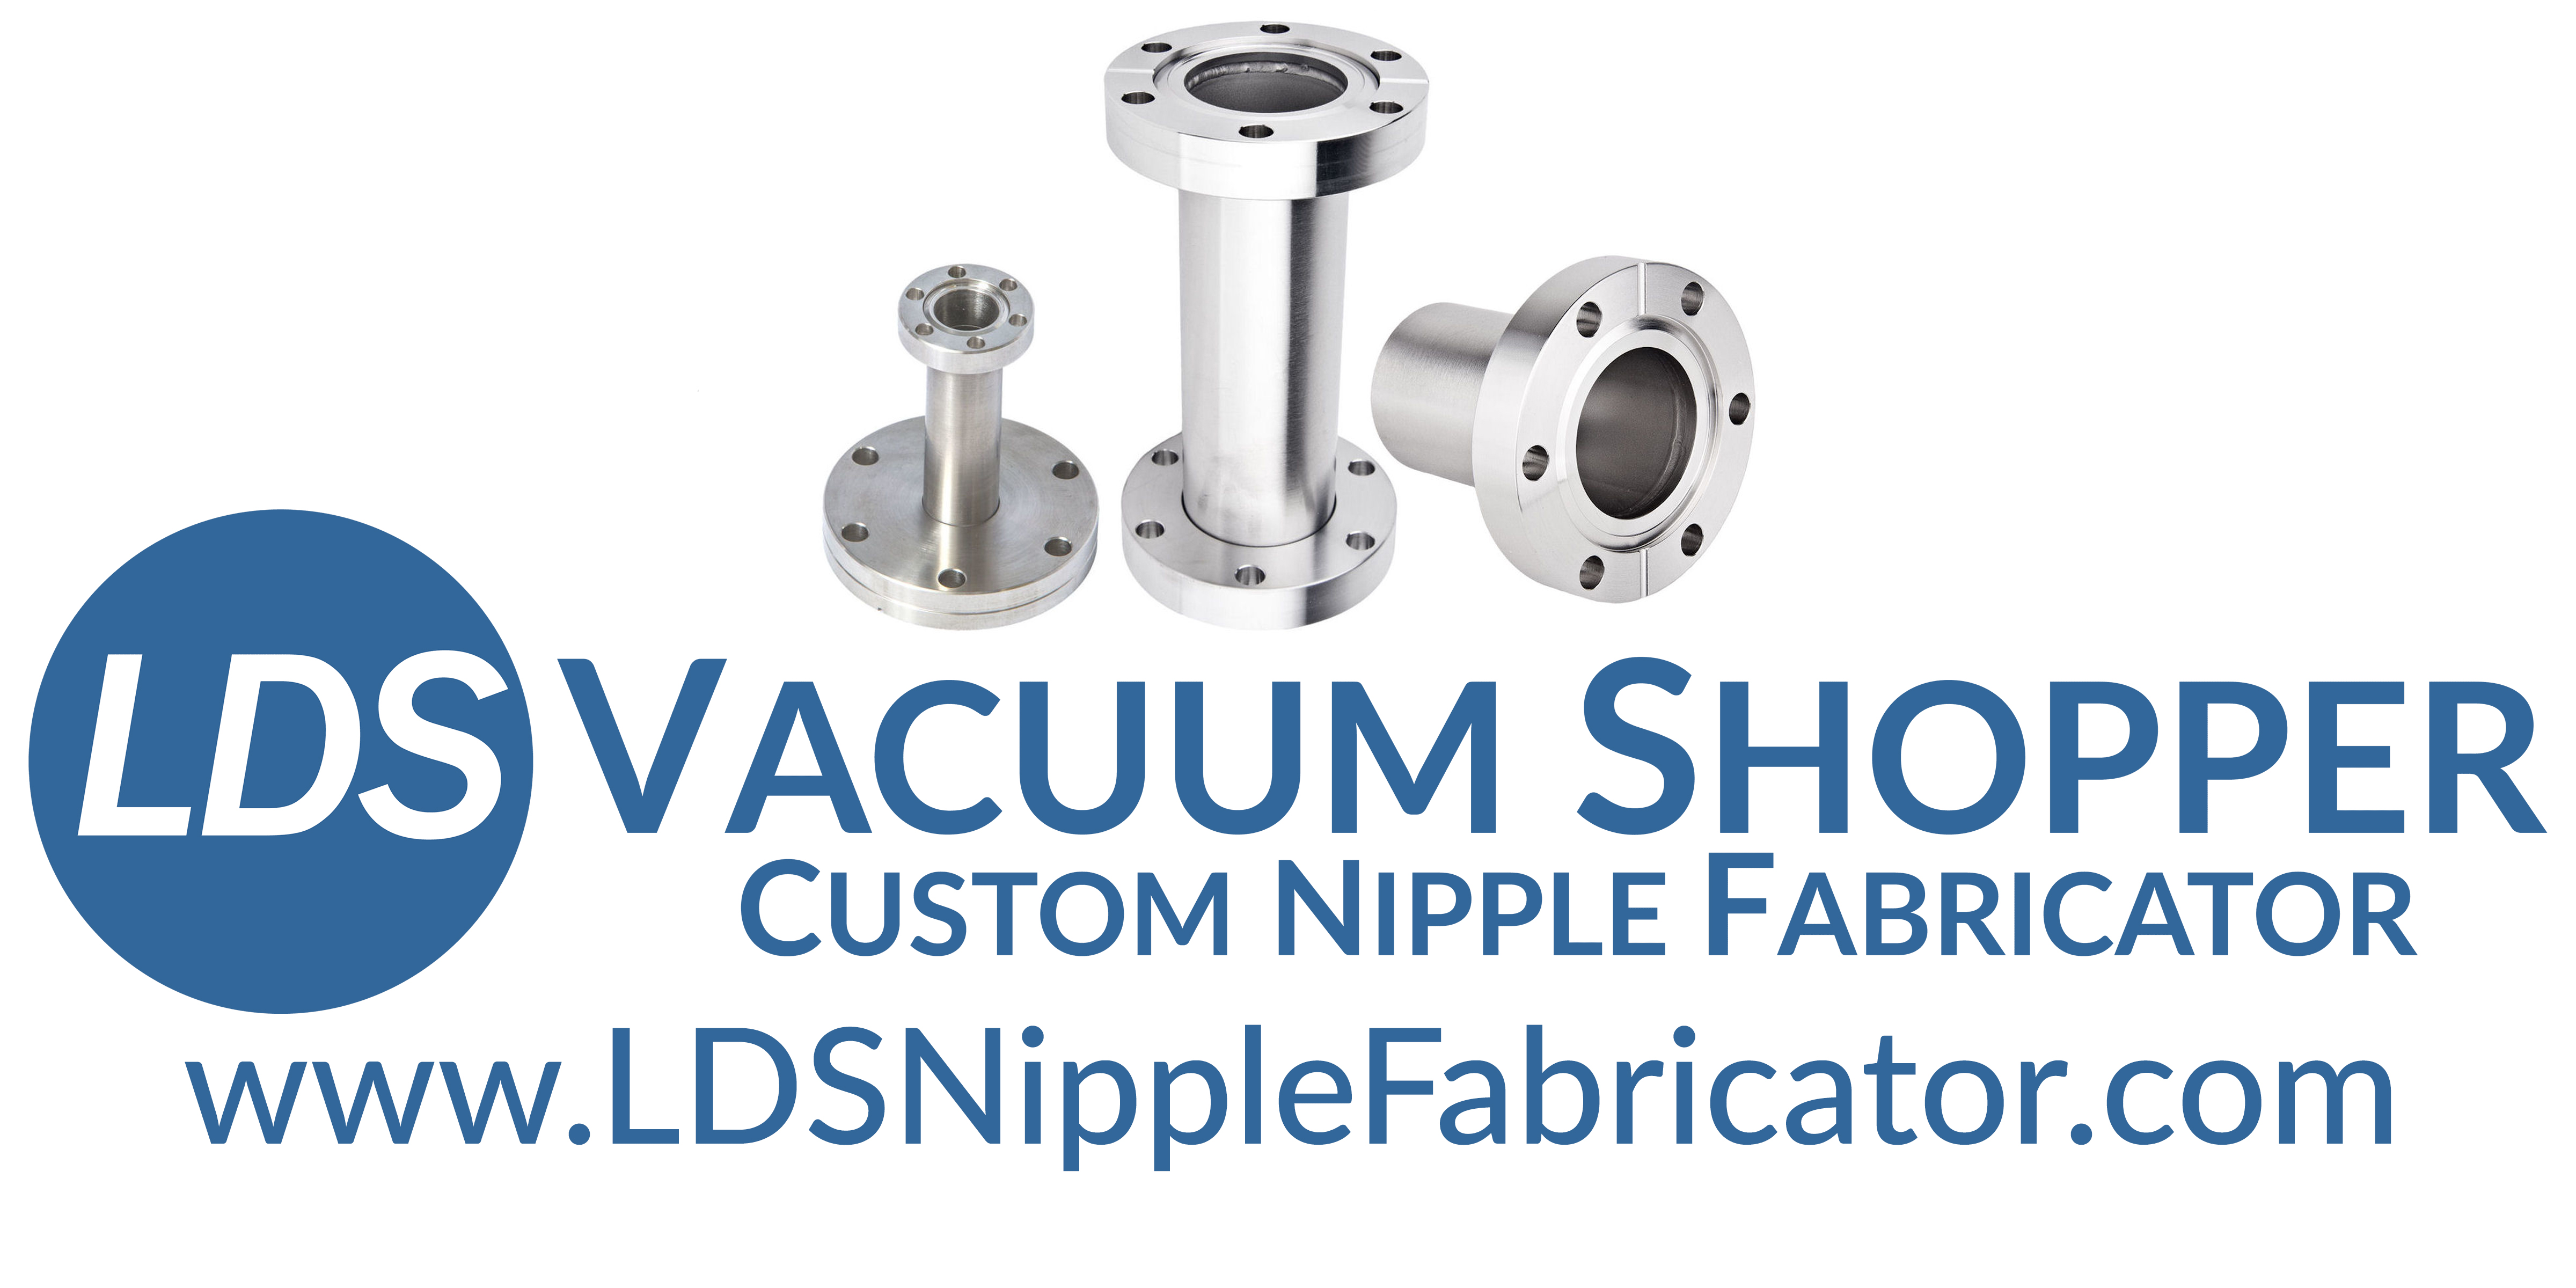 LDS Custom Nipple Fabricator